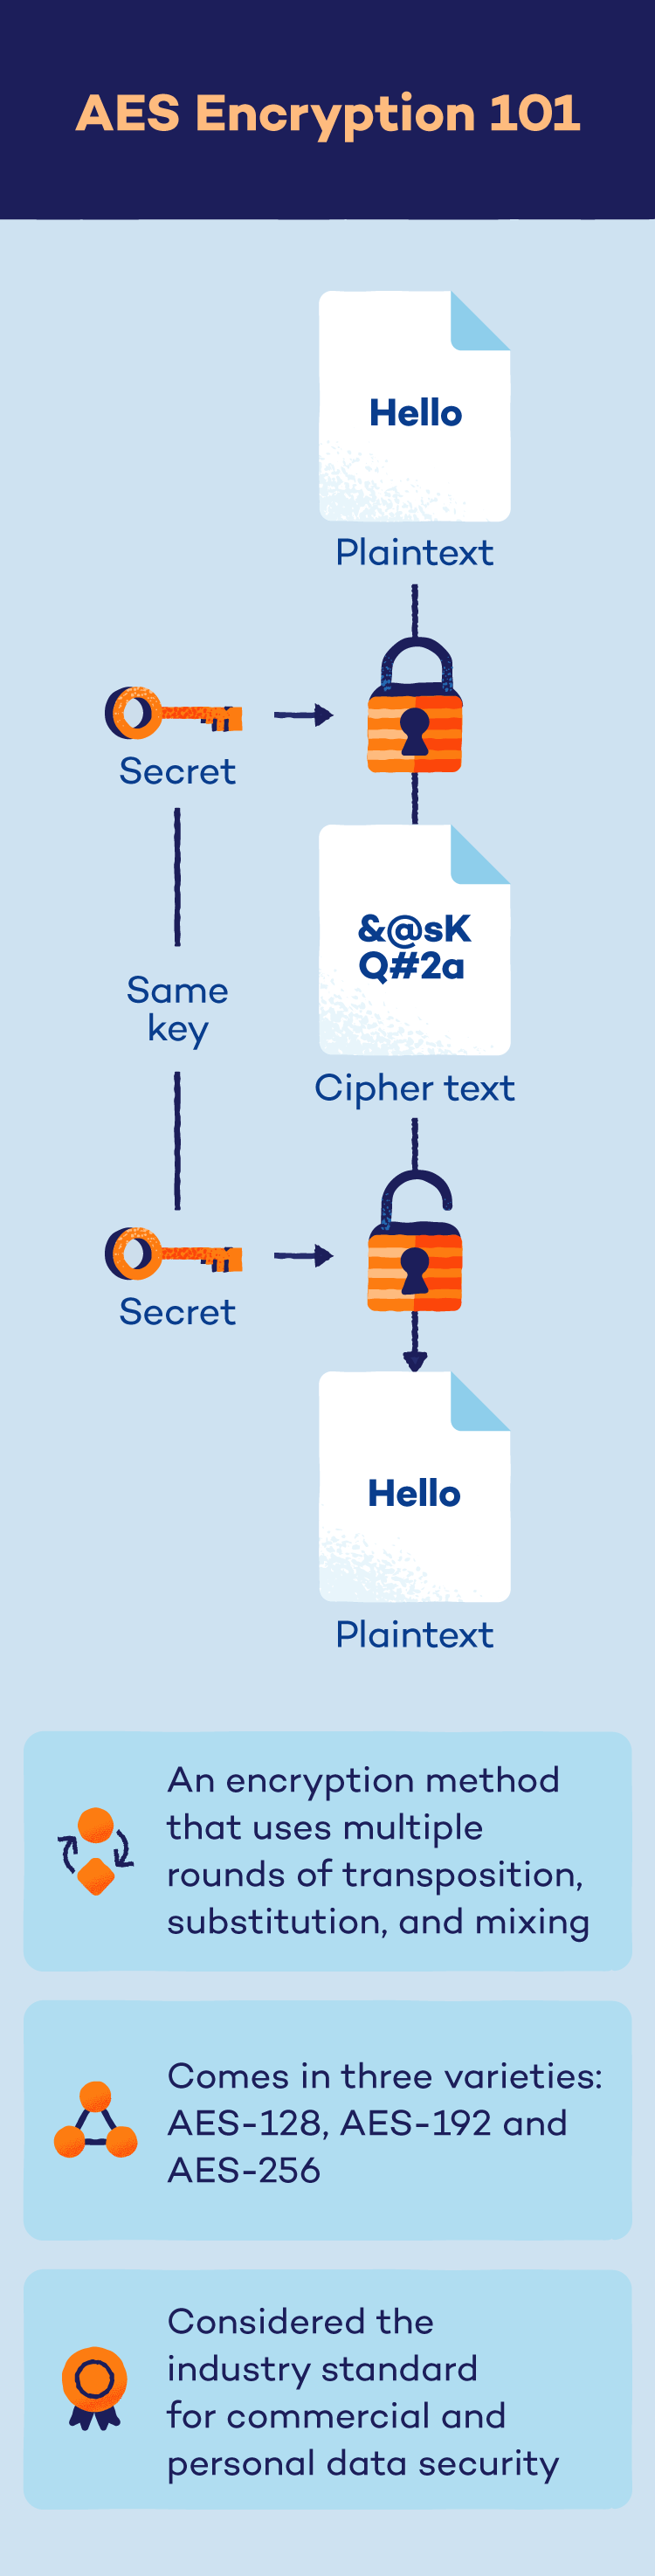 Illustration depicting AES encryption 101.